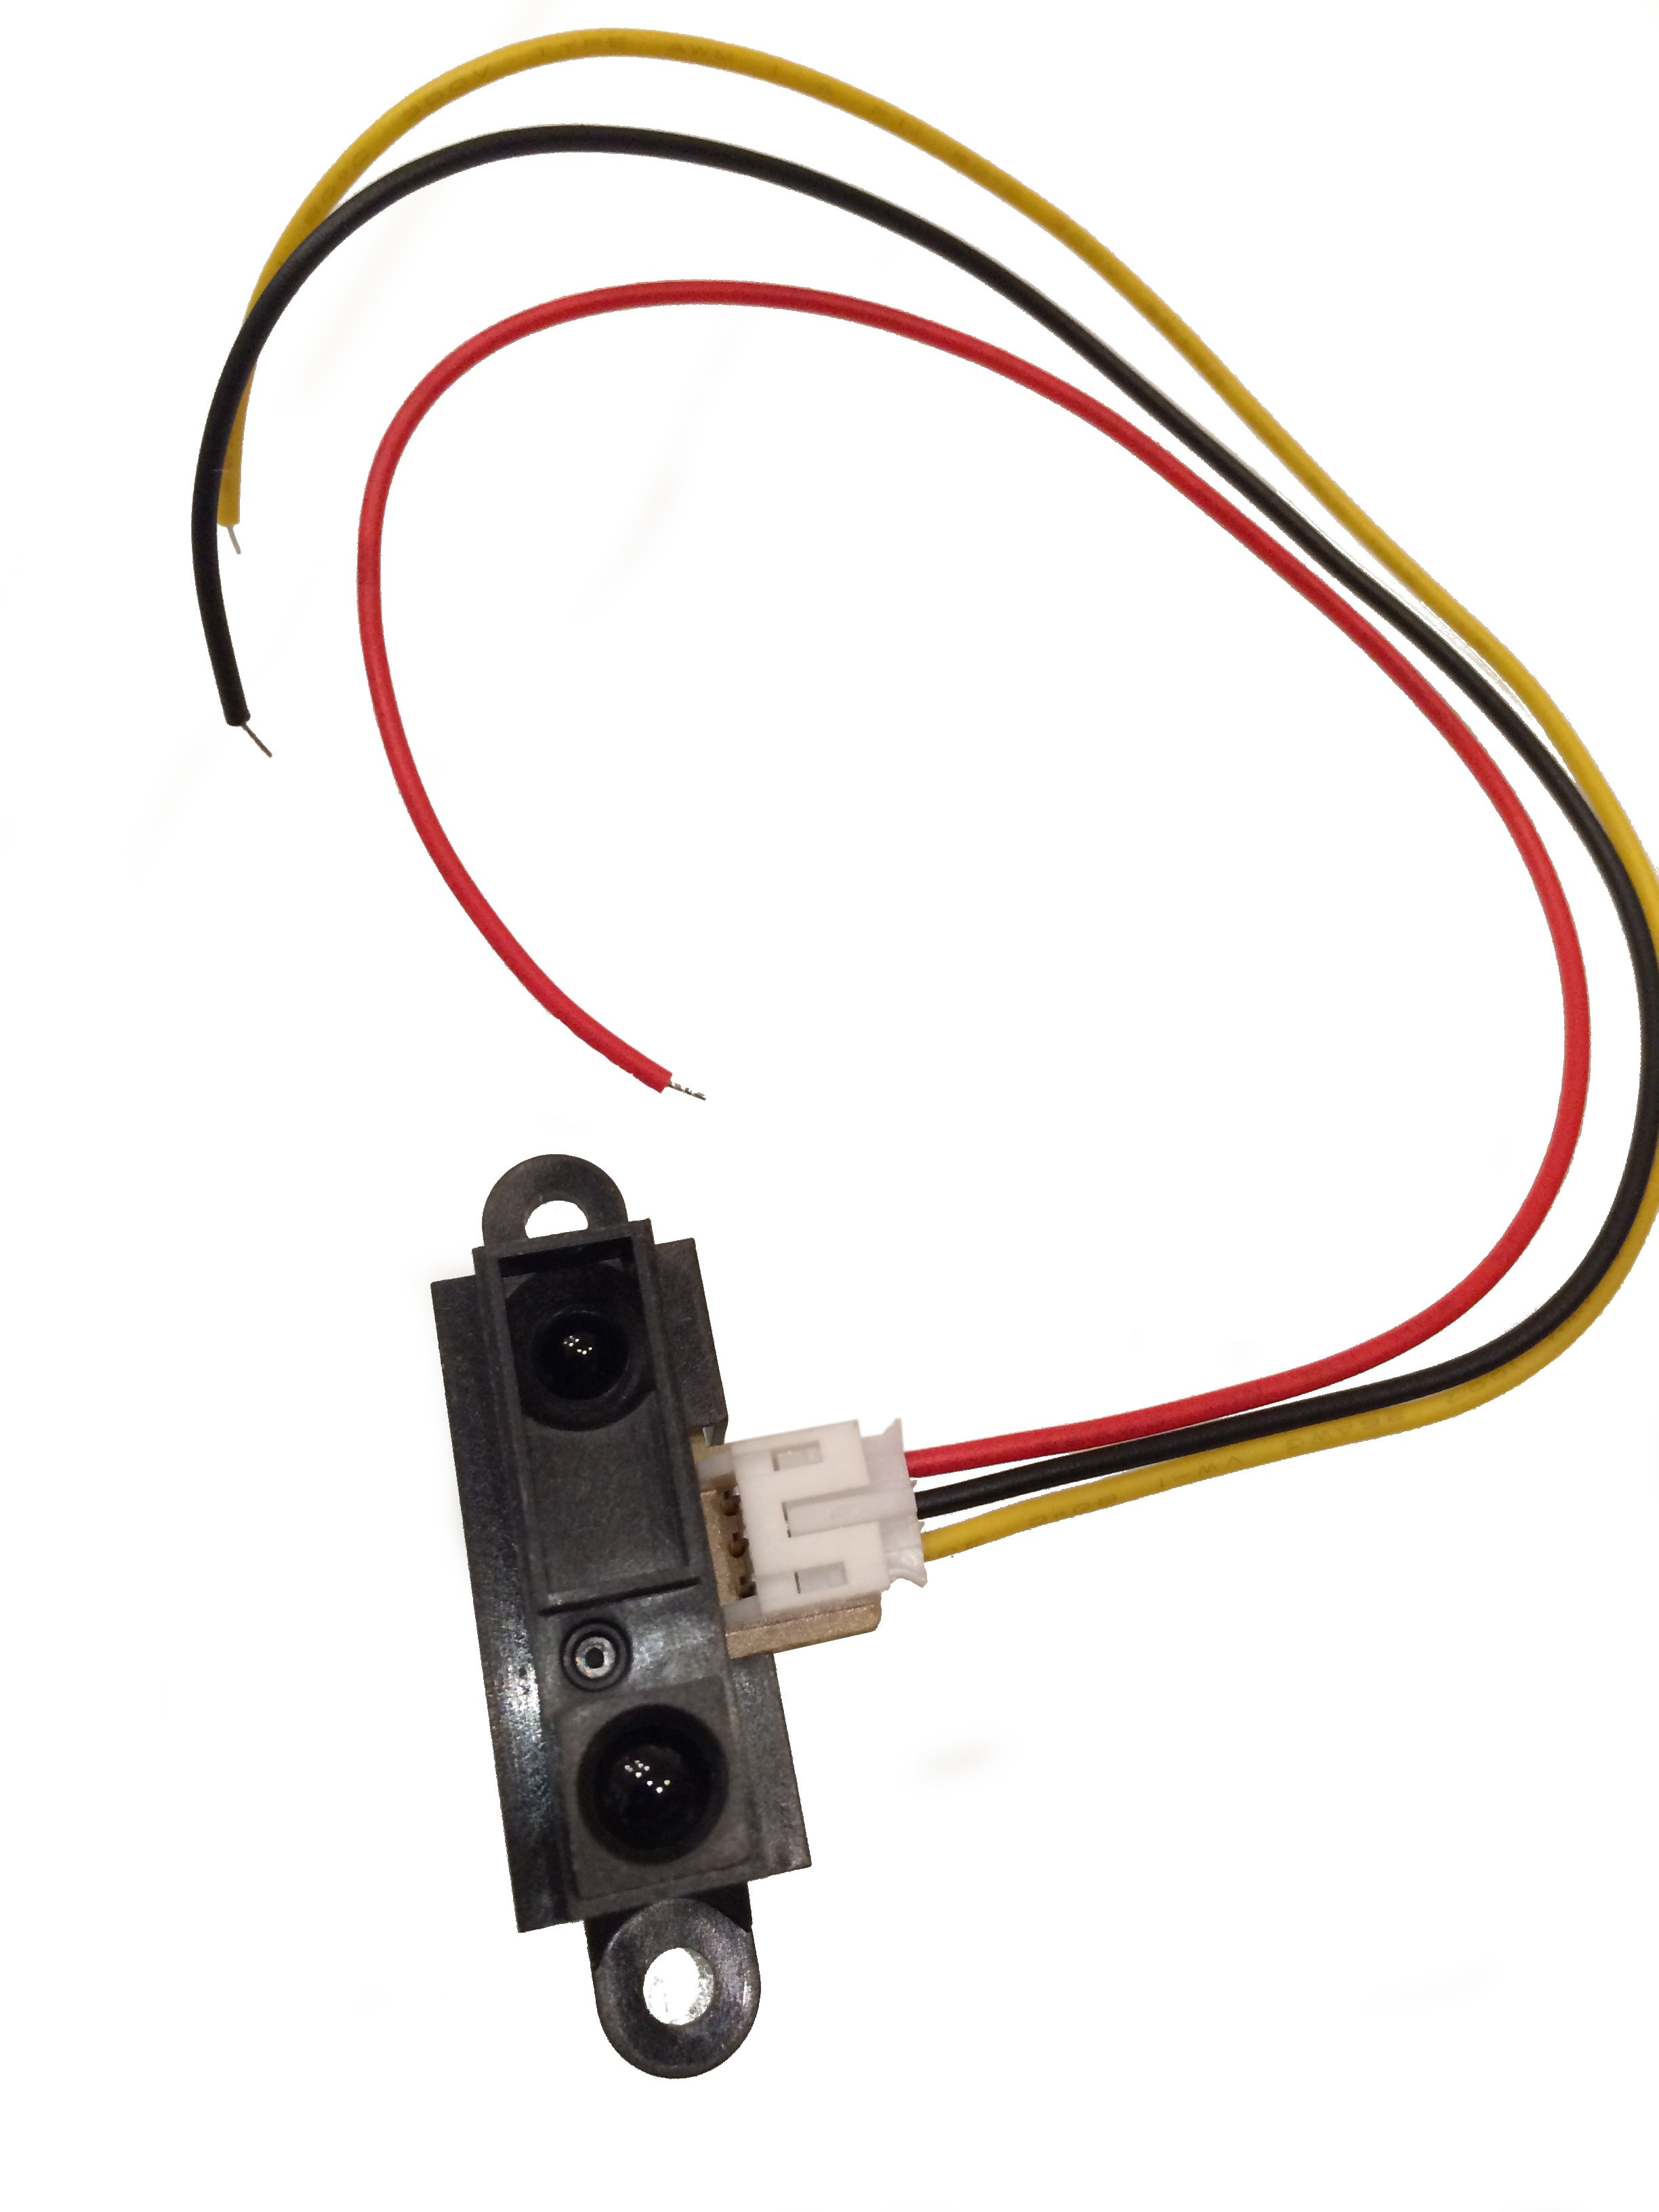 Cable New Standard GP2Y0A41SK0F SHARP IR Infrared Range Sensor Module